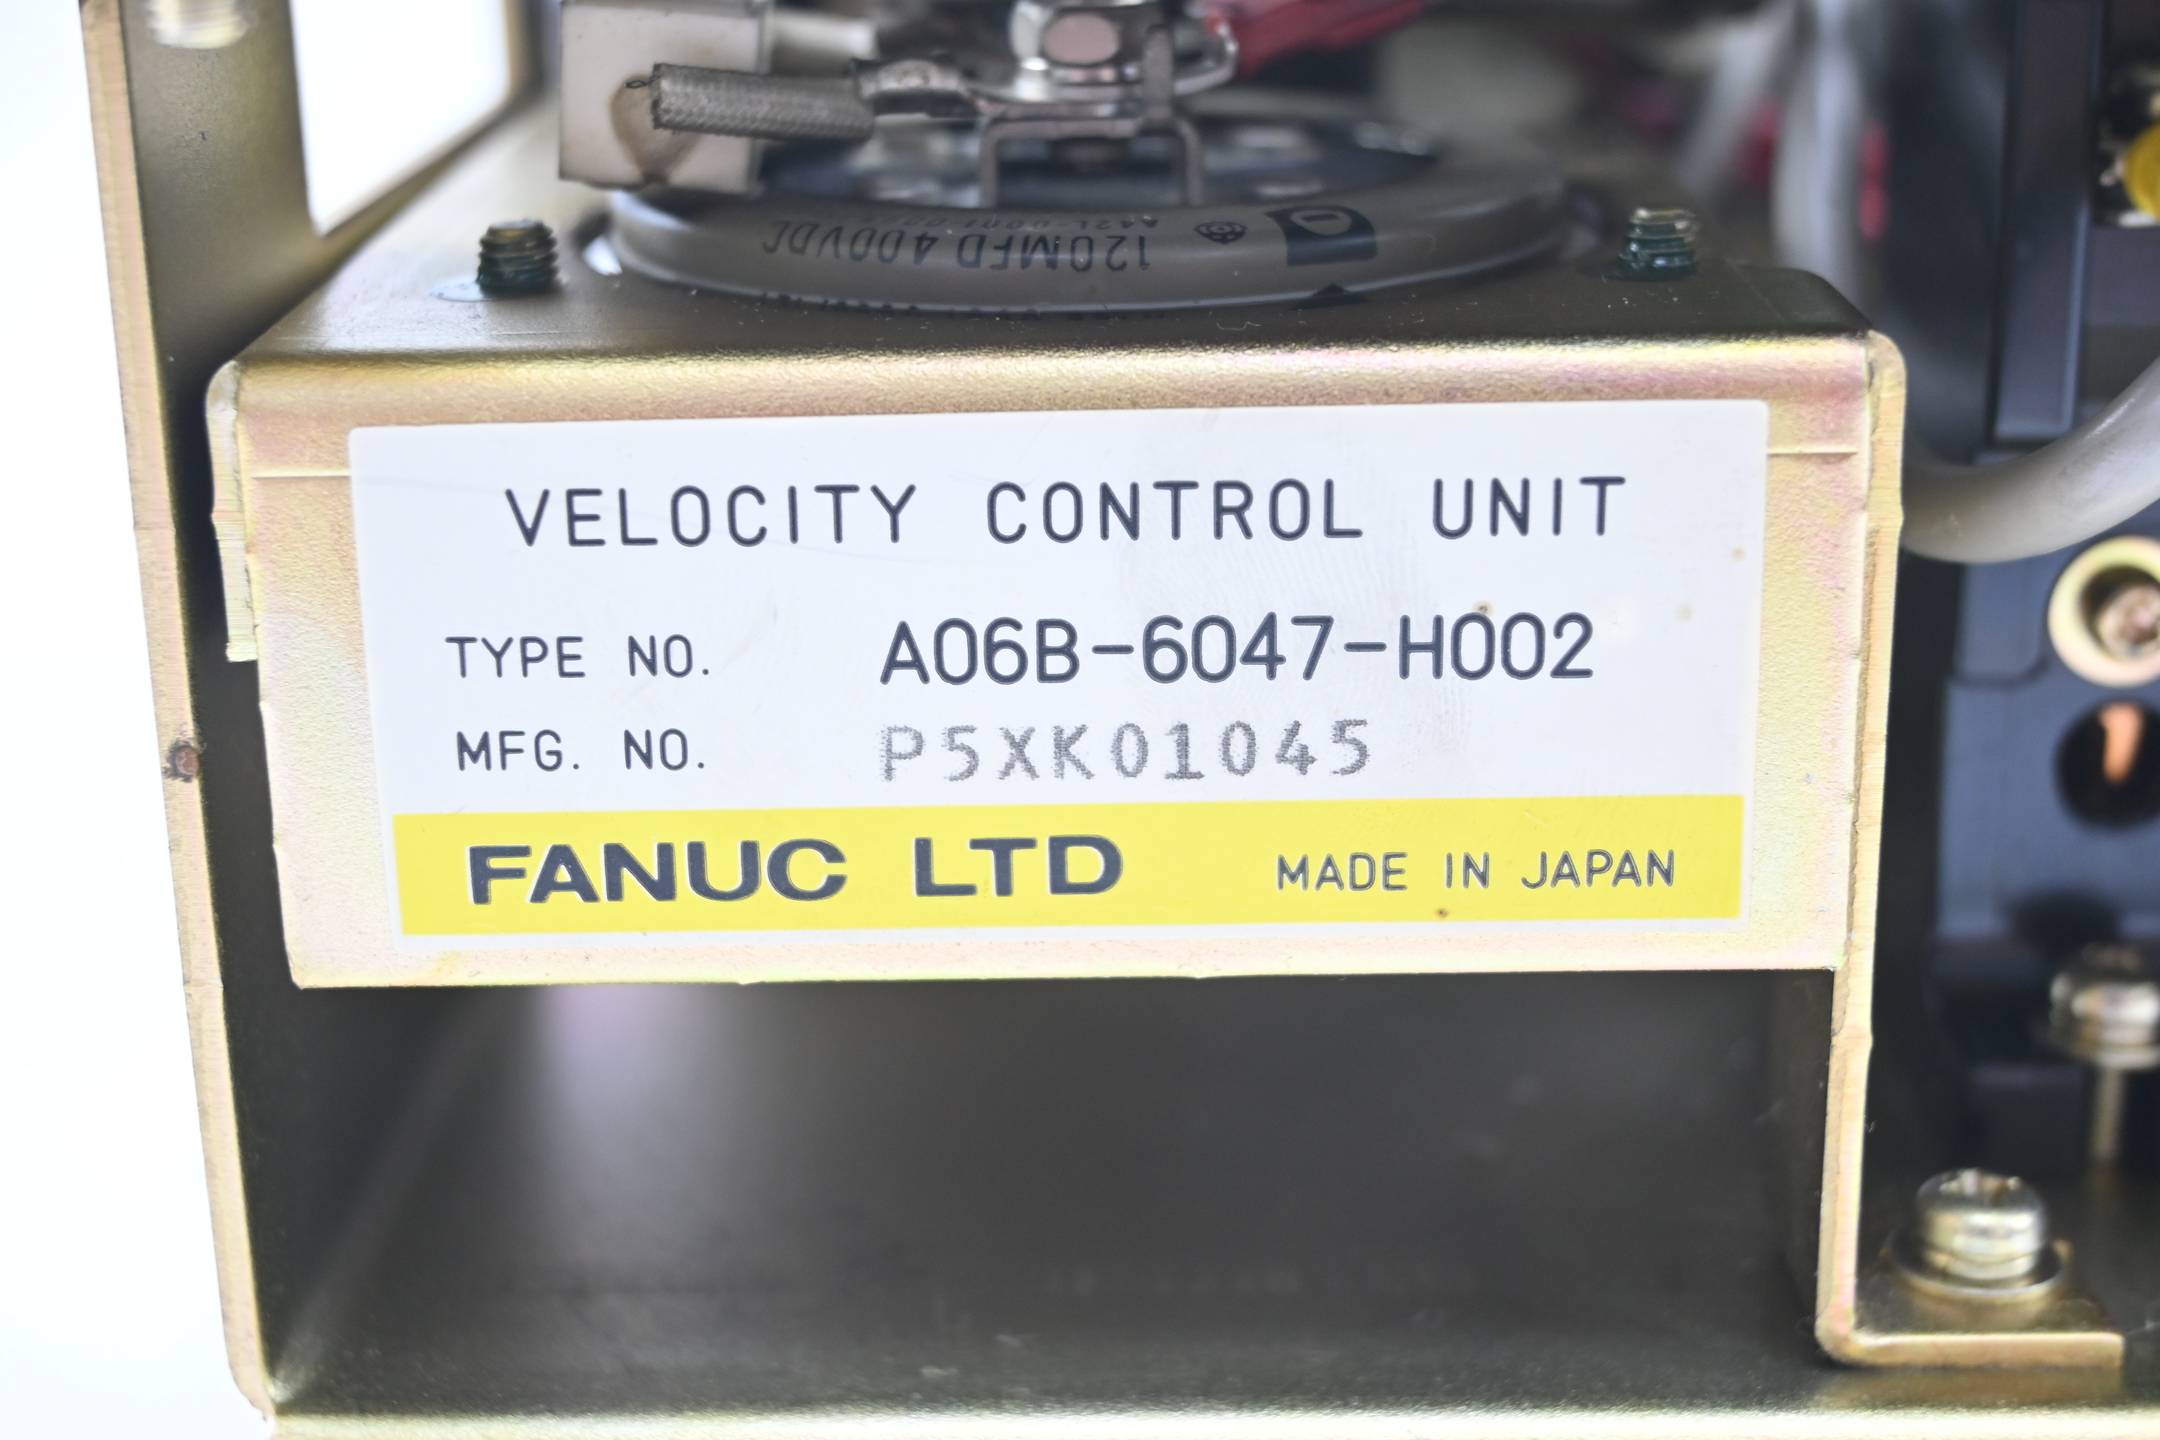 Fanuc Velocity Control Unit A06B-6047-H002